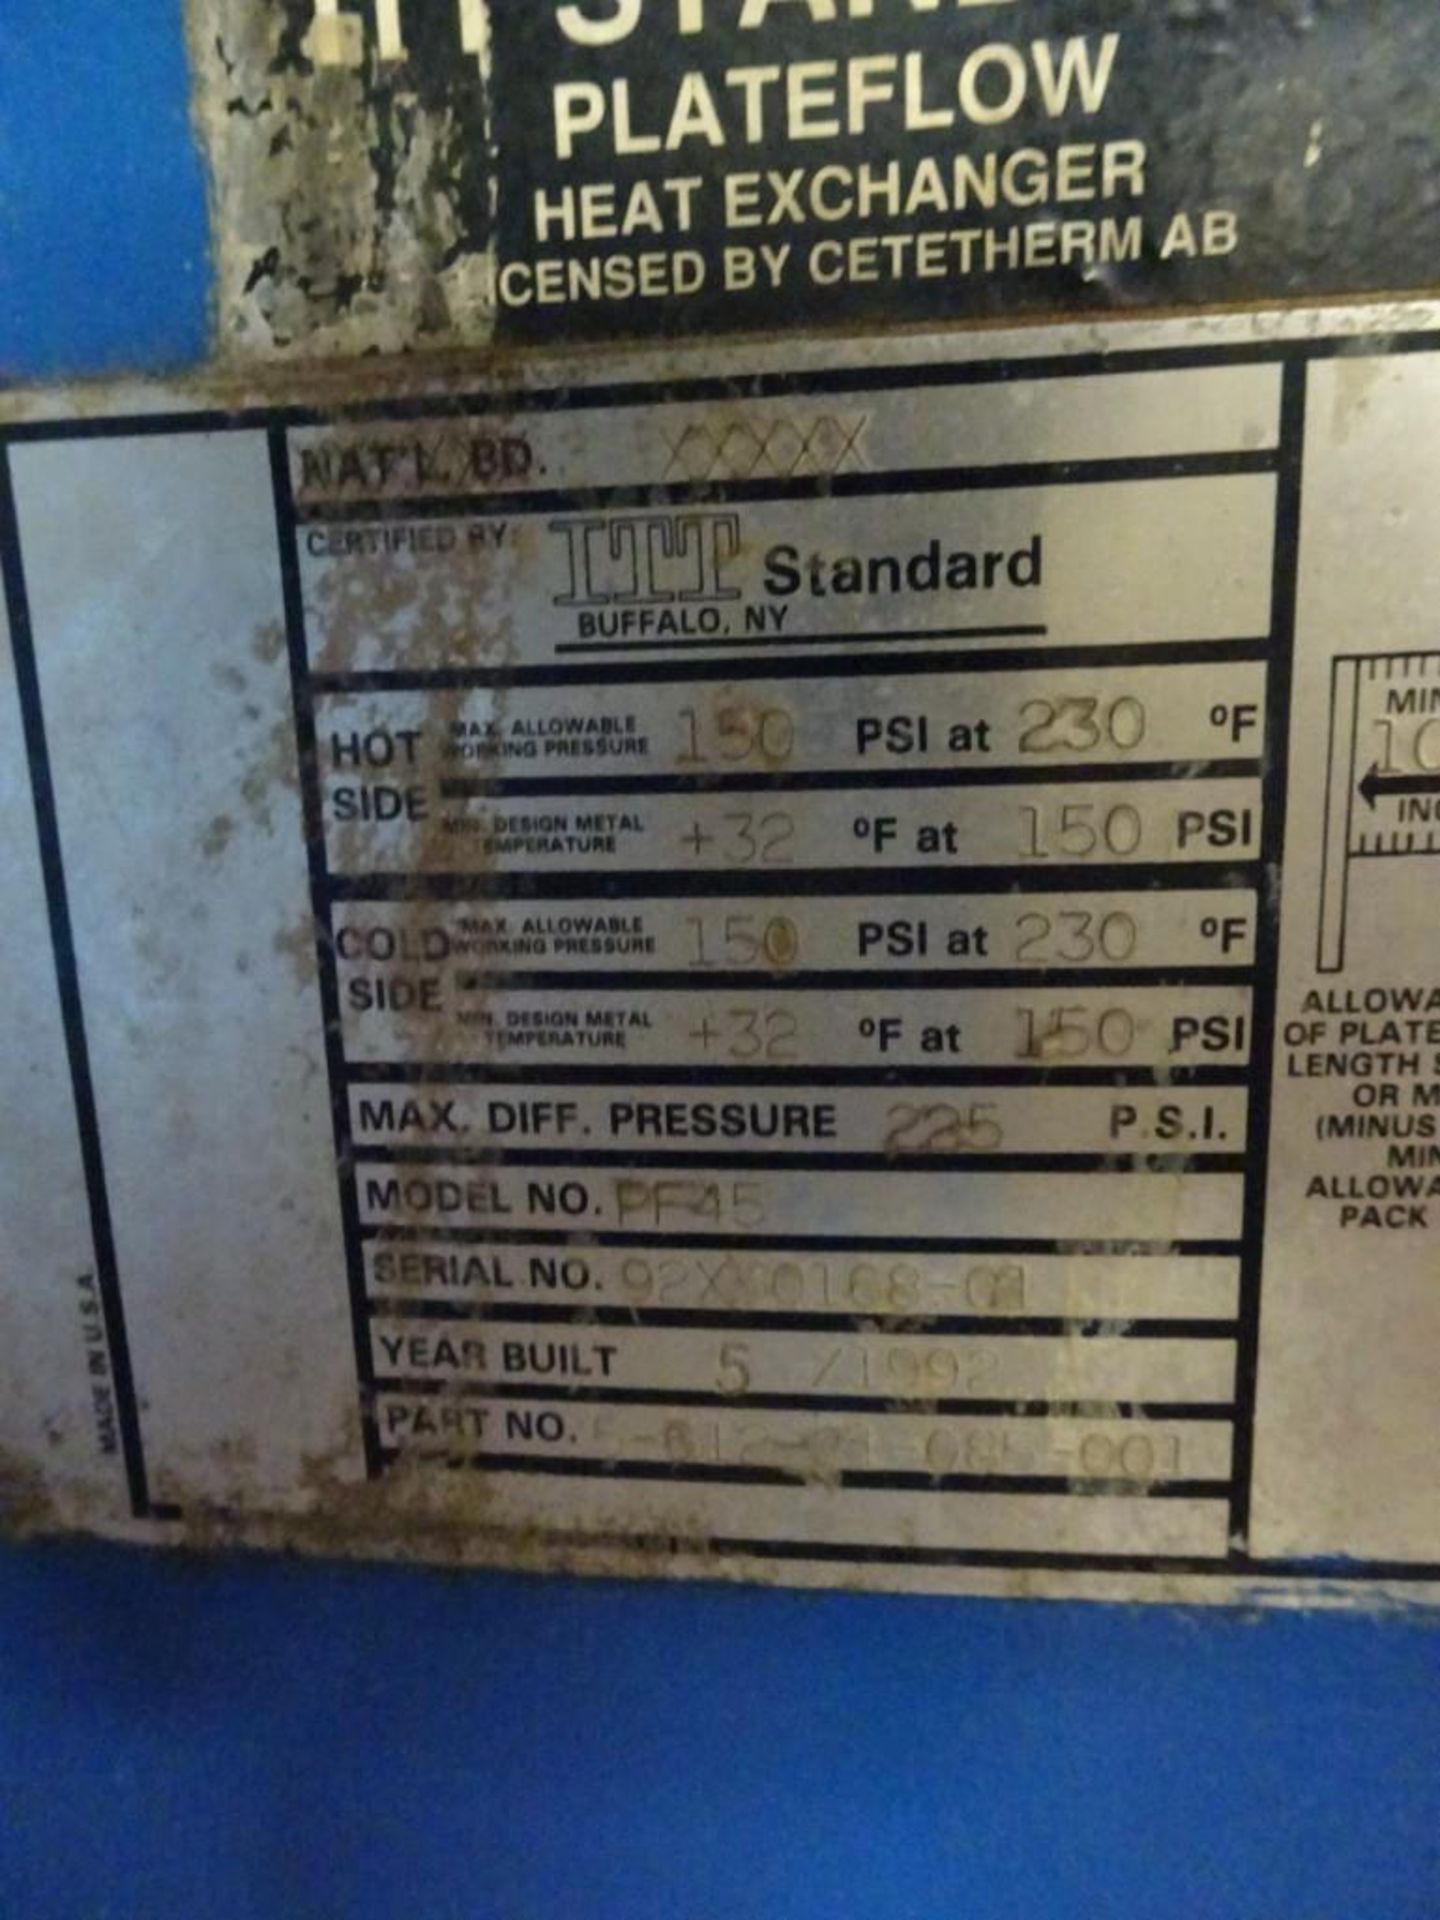 ITT Standard PF45 Heat Exchanger - Image 3 of 4